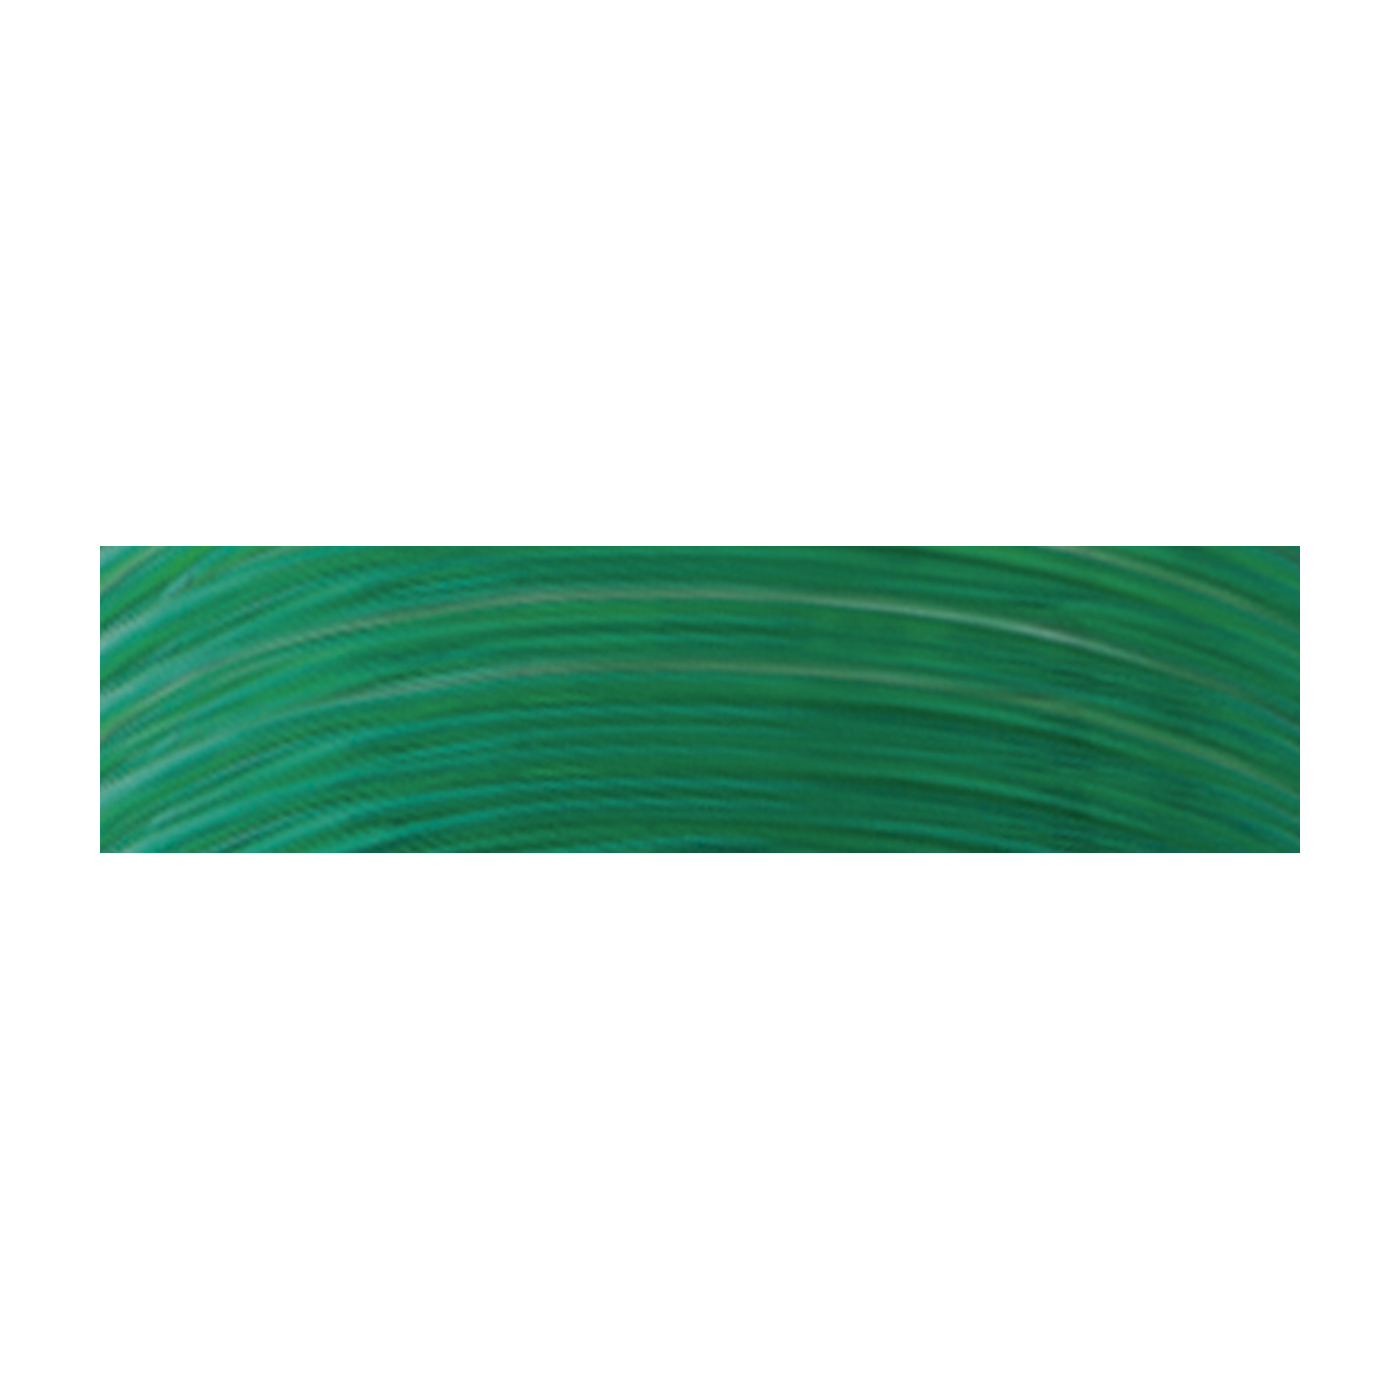 Griffin Jewelry Elastic Cord Bindfaden, grün, ø 0,5 mm - 25 m